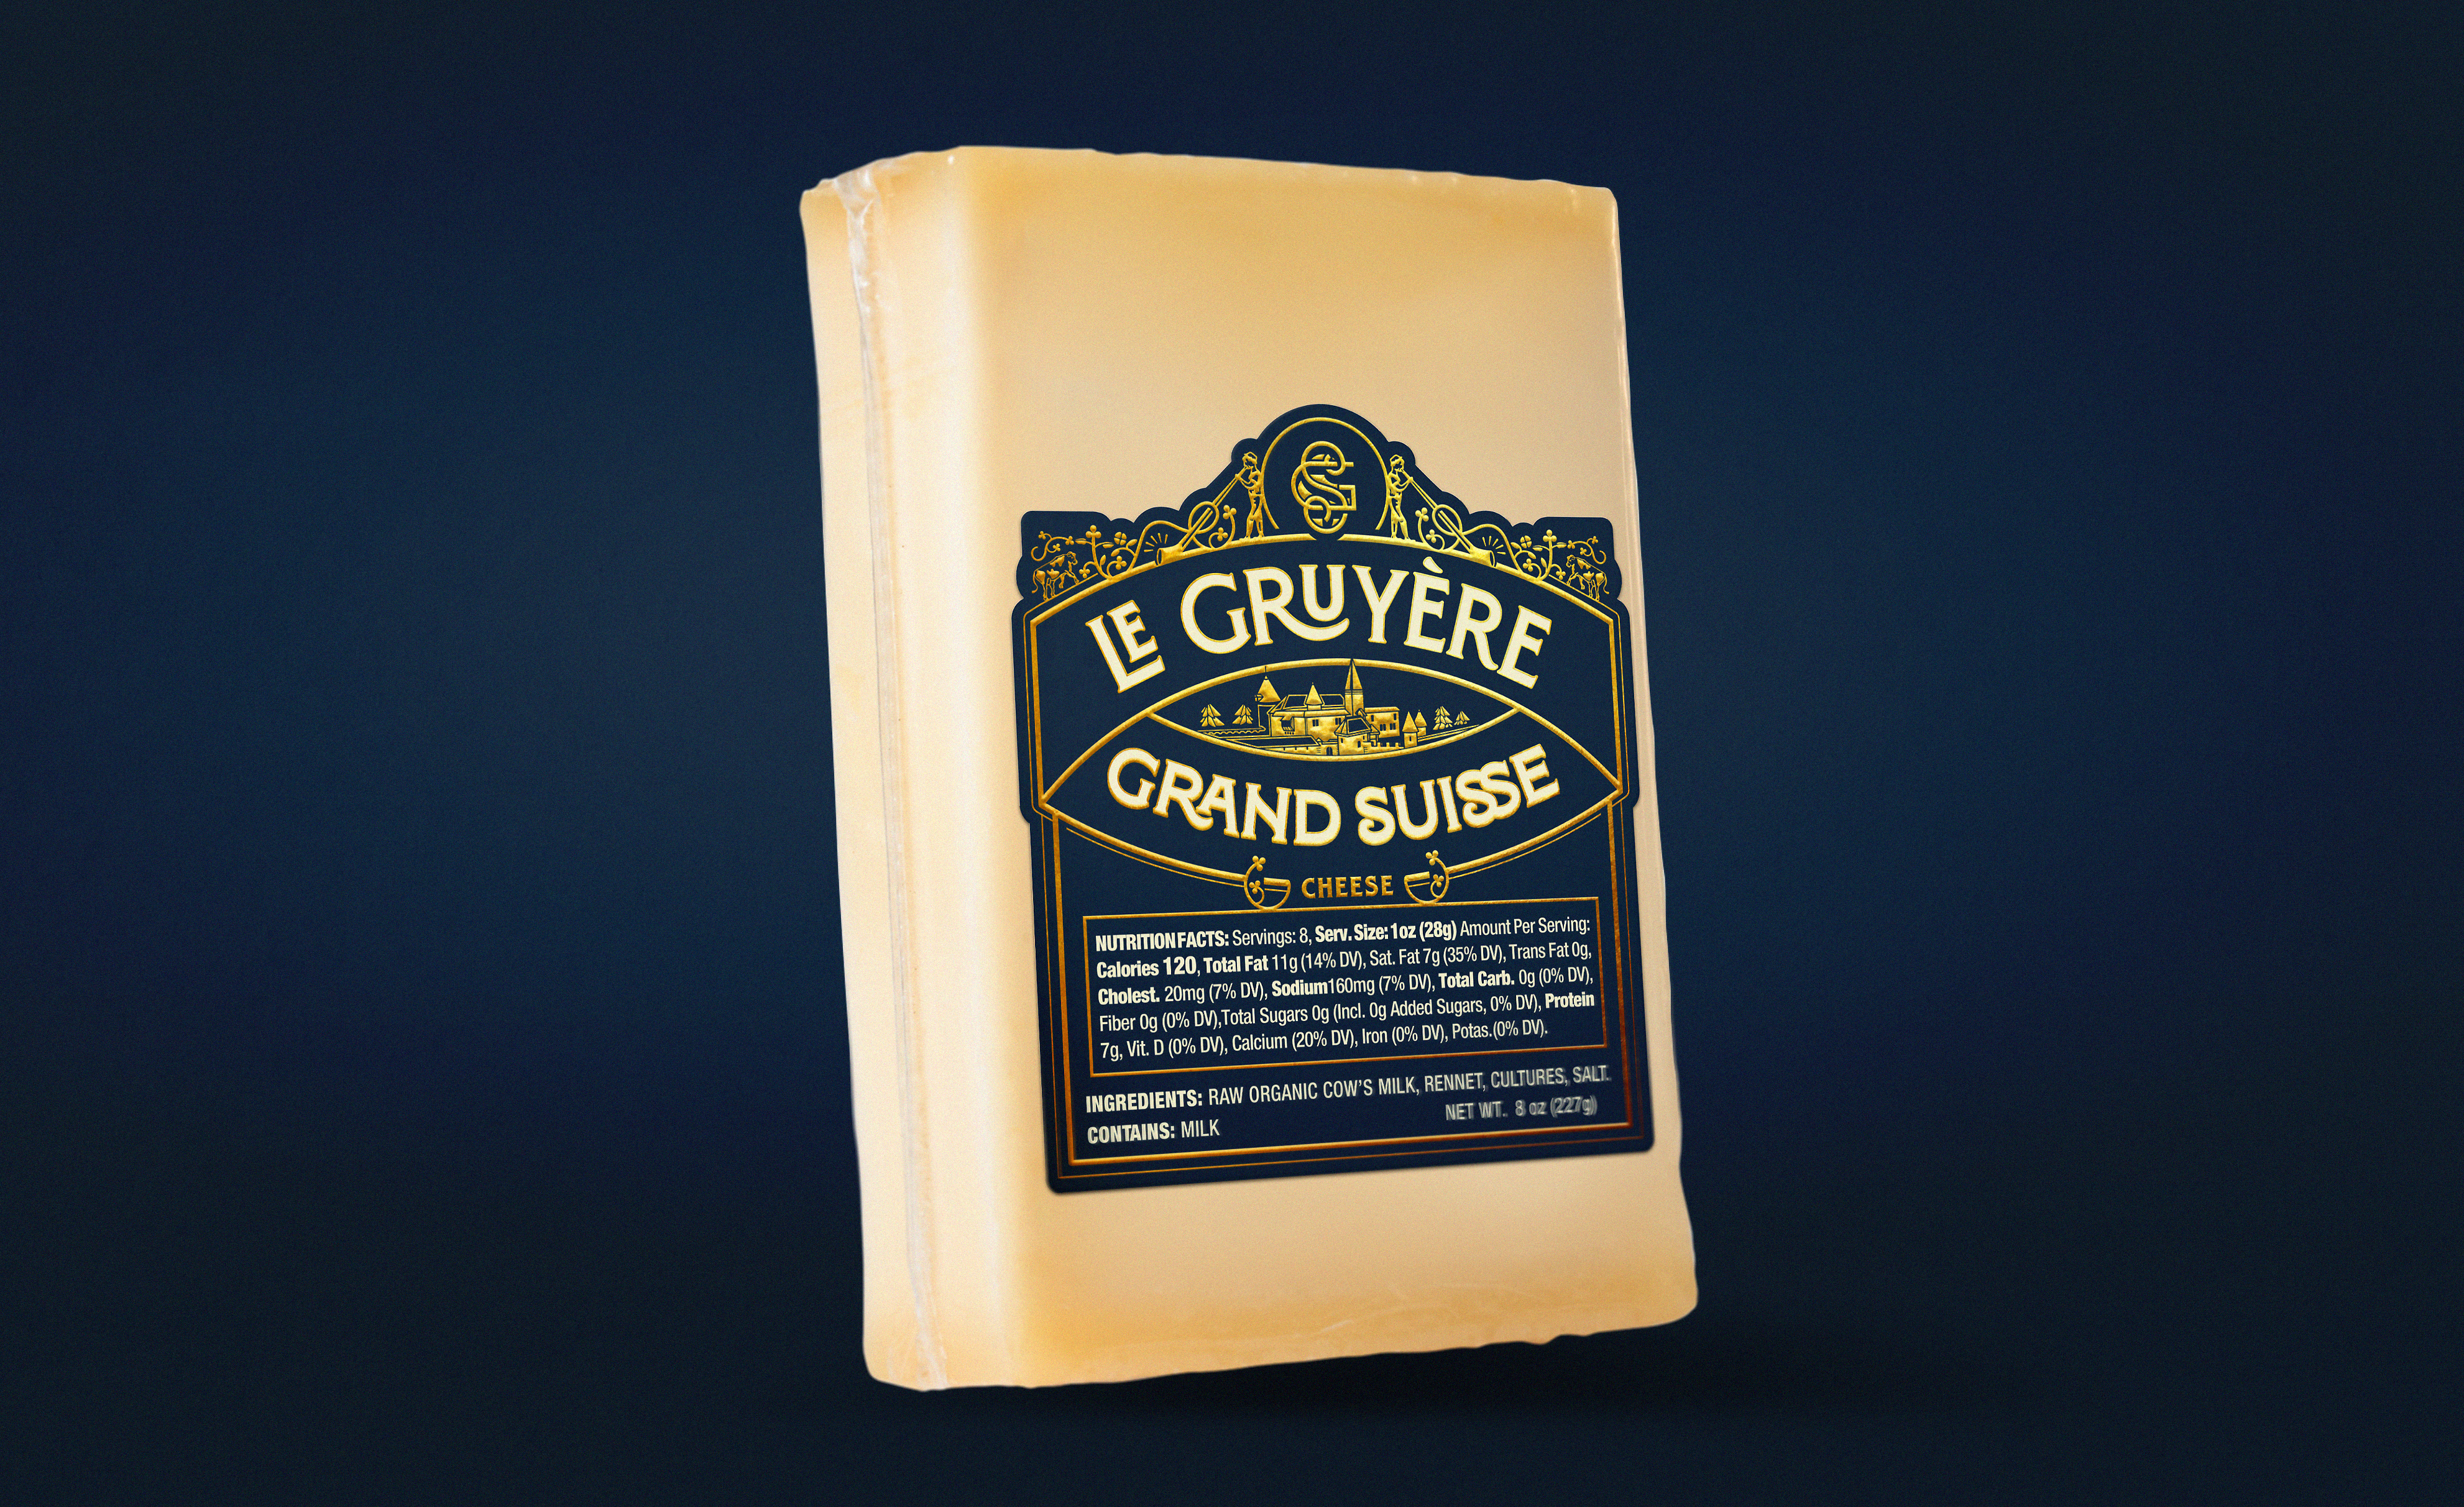 label-cheese-side-gruyere-preview-grand-suisse-close-zeki-michael-design-branding-studio-packaging-red copy